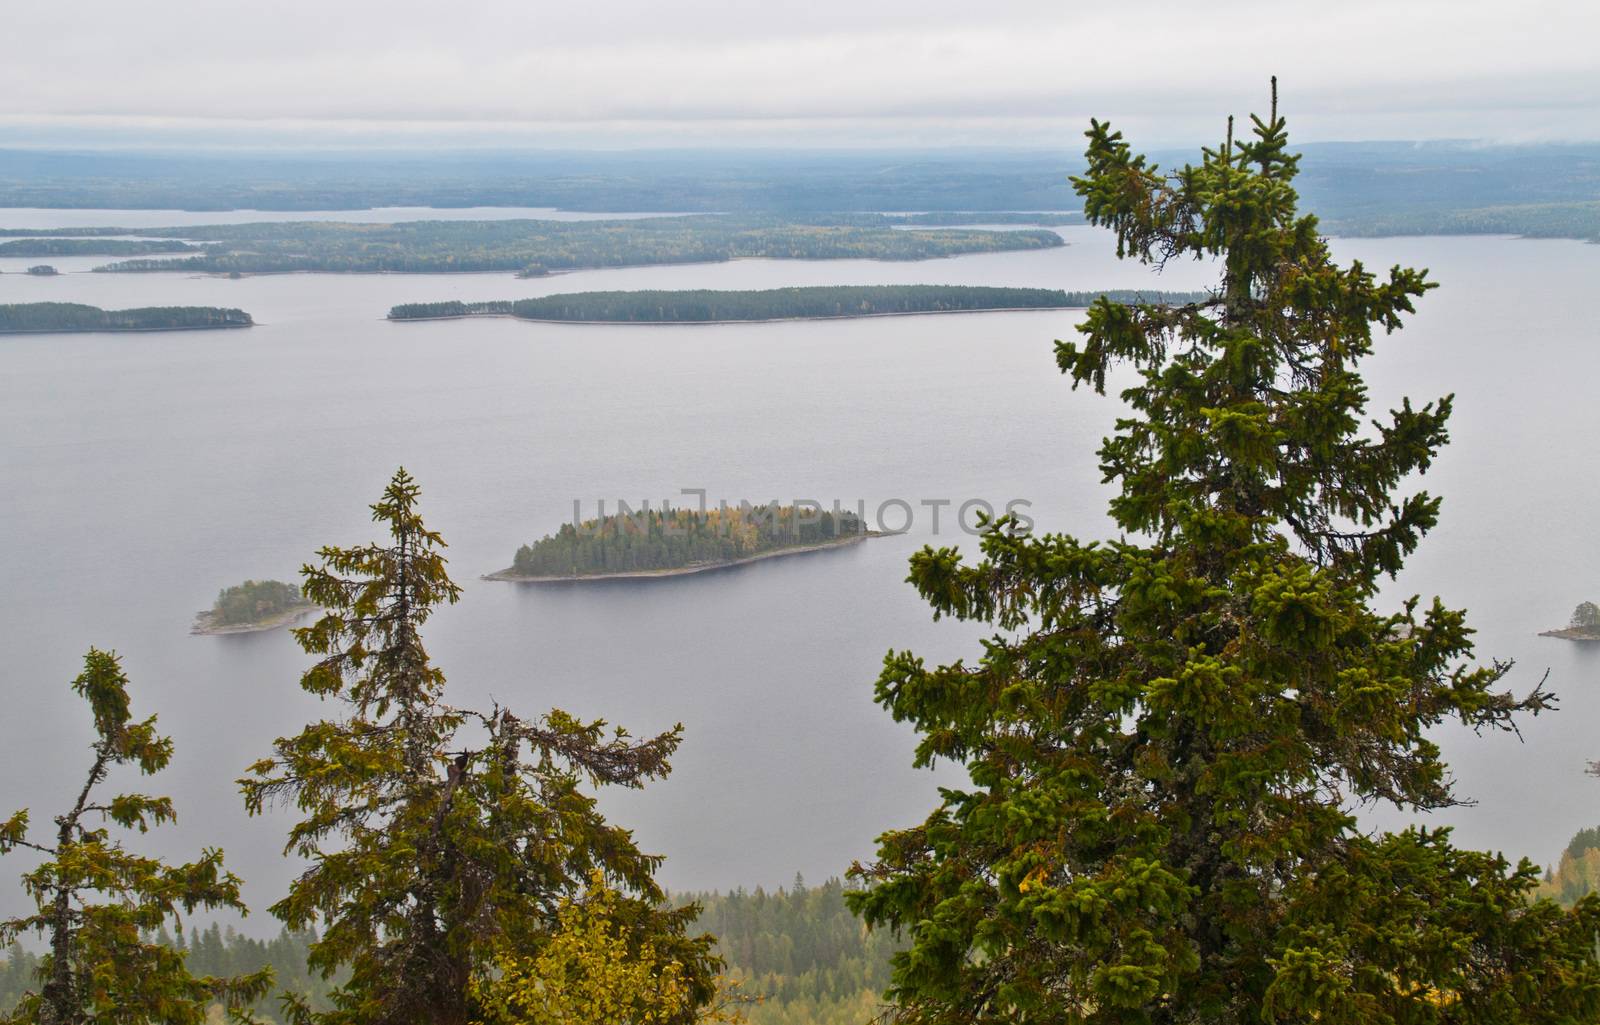 Lake in the region of North-Karelia, Finland